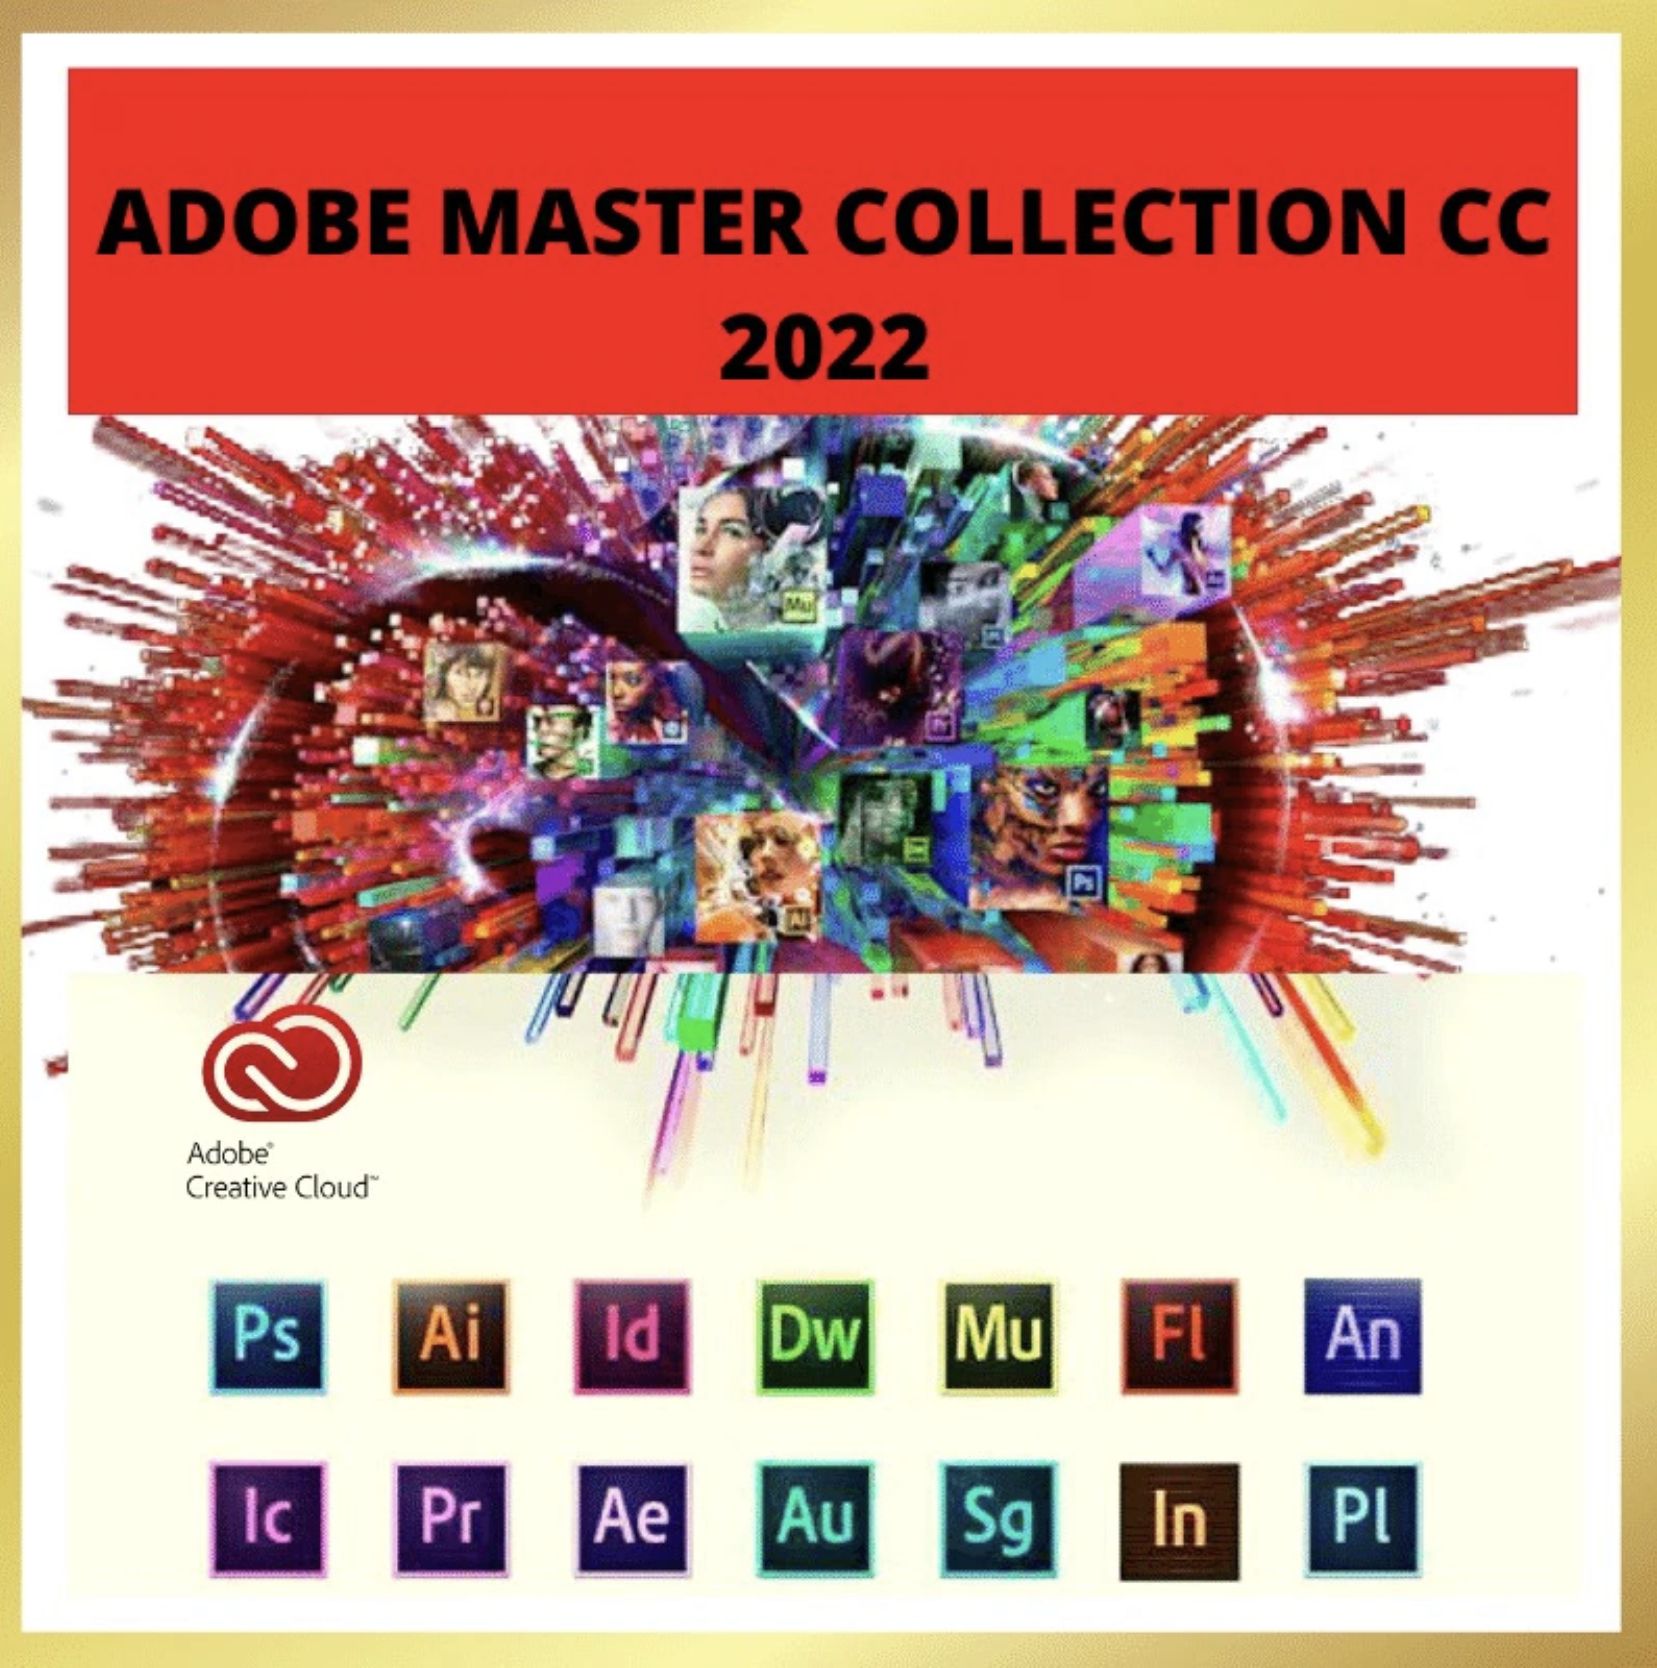 Master collection 2023. Adobe Master collection 2022. Адоб мастер коллекшн 2022. Adobe Master collection 2023. Адобе мастер коллекшн что это.